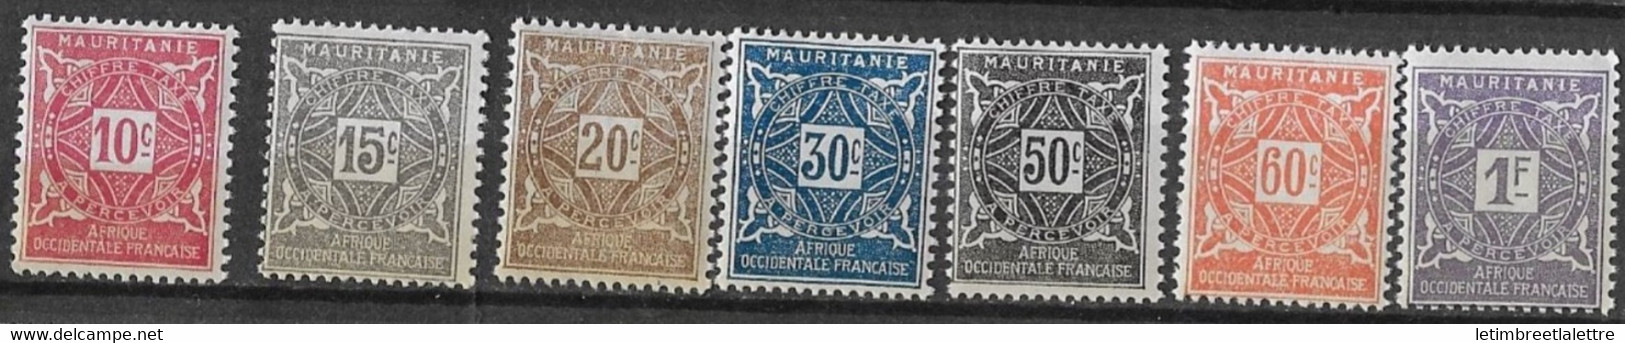 ⭐ Mauritanie - Taxe - YT N° 18 à 24 ** - Neuf Sans Charnière - 1914 ⭐ - Ungebraucht